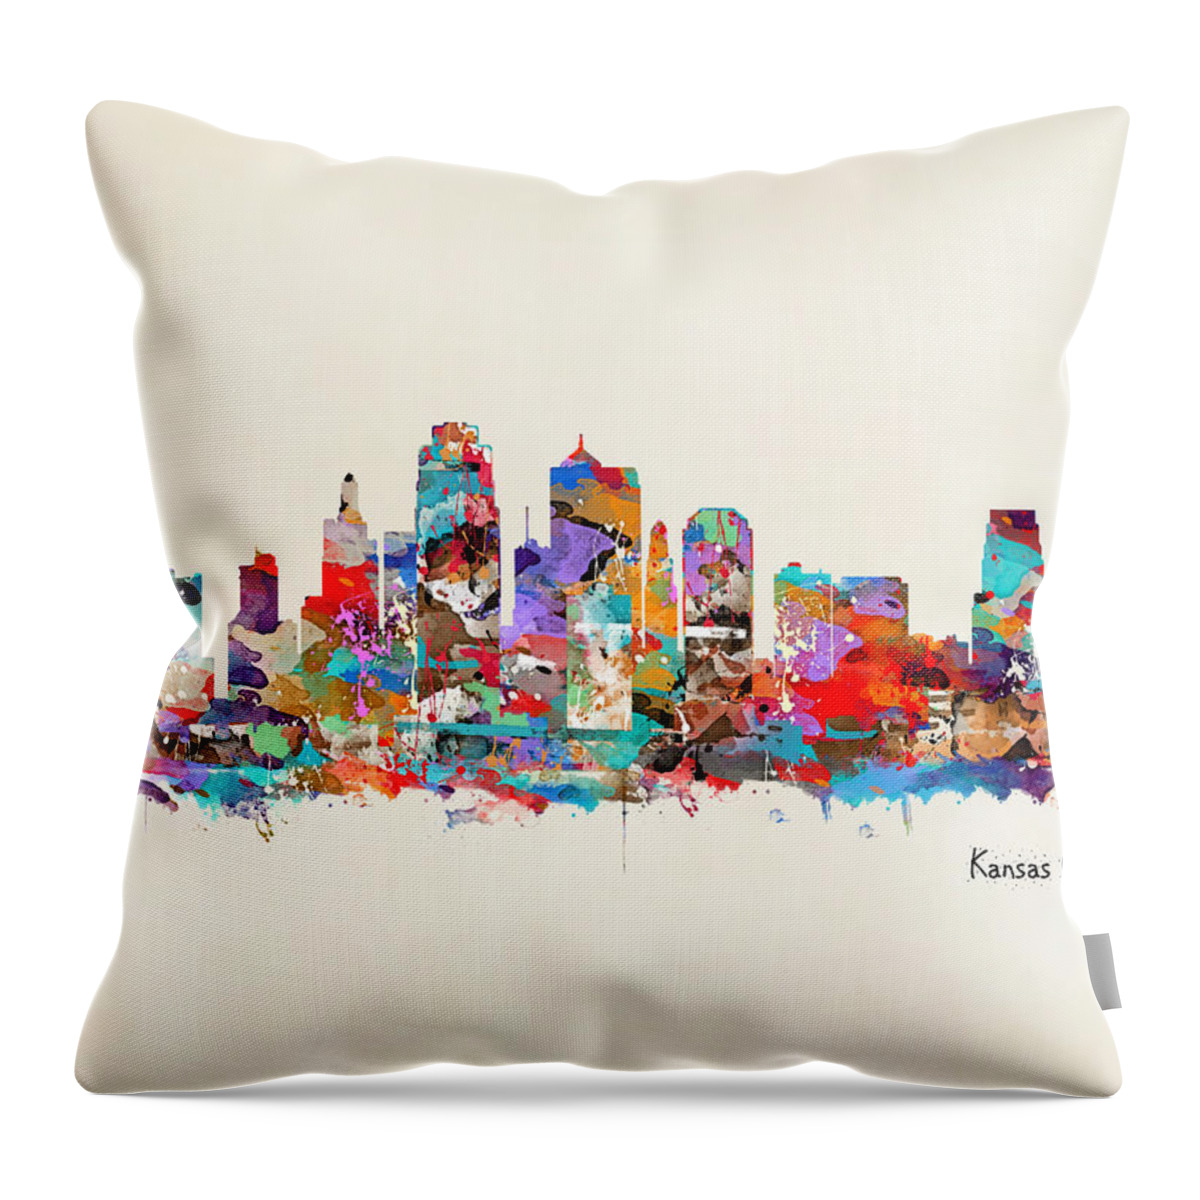 Kansas City Missouri Throw Pillow featuring the painting Kansas City Missouri by Bri Buckley